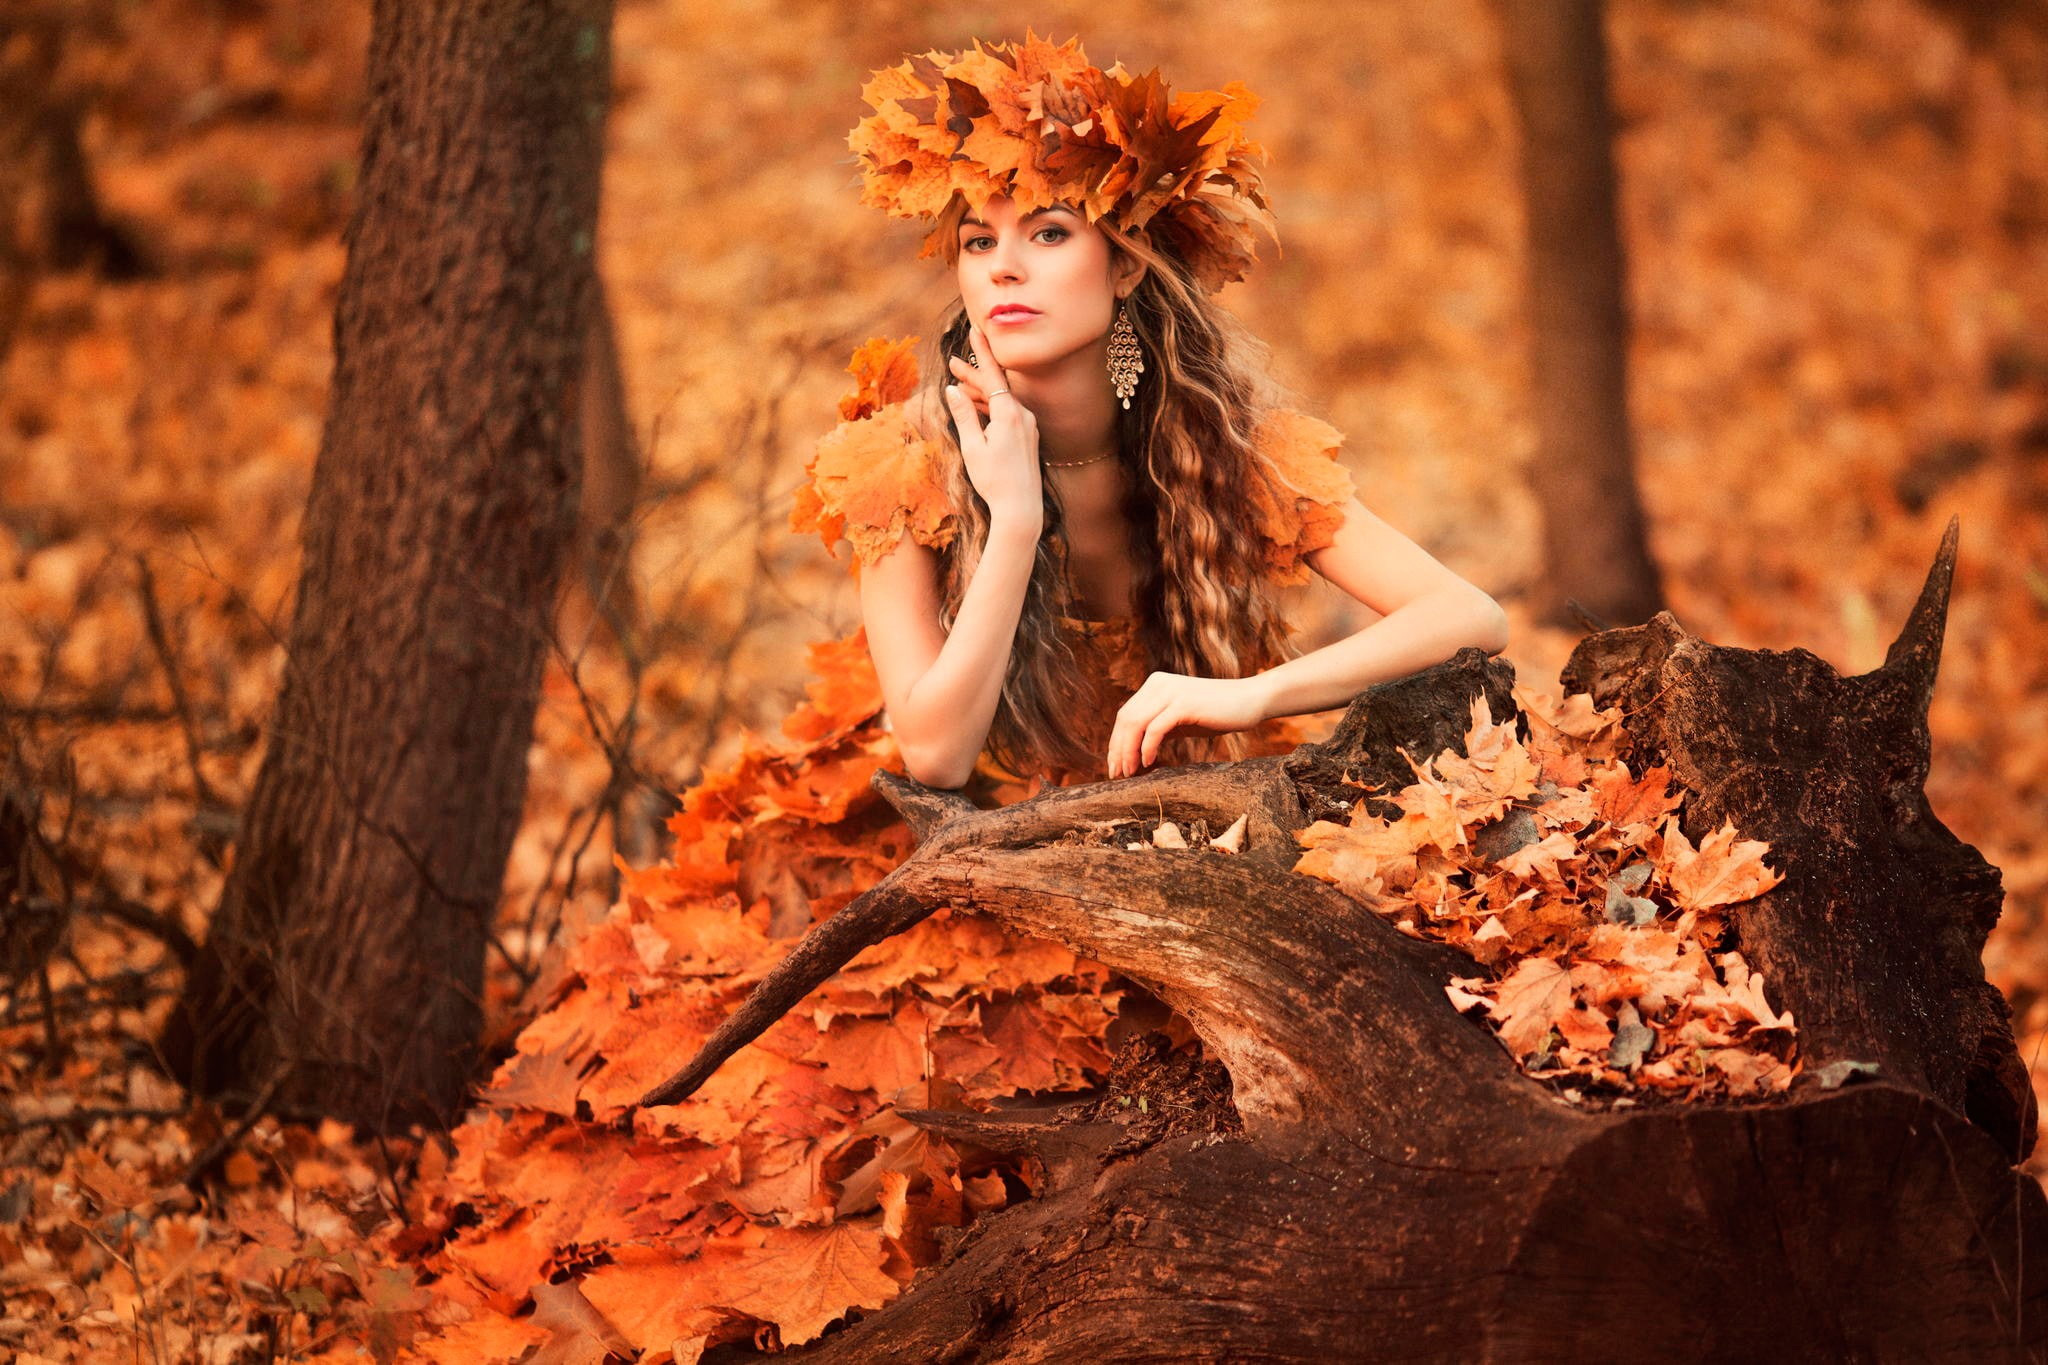 women model brunette long hair women outdoors trees fall leaves wavy hair wreaths